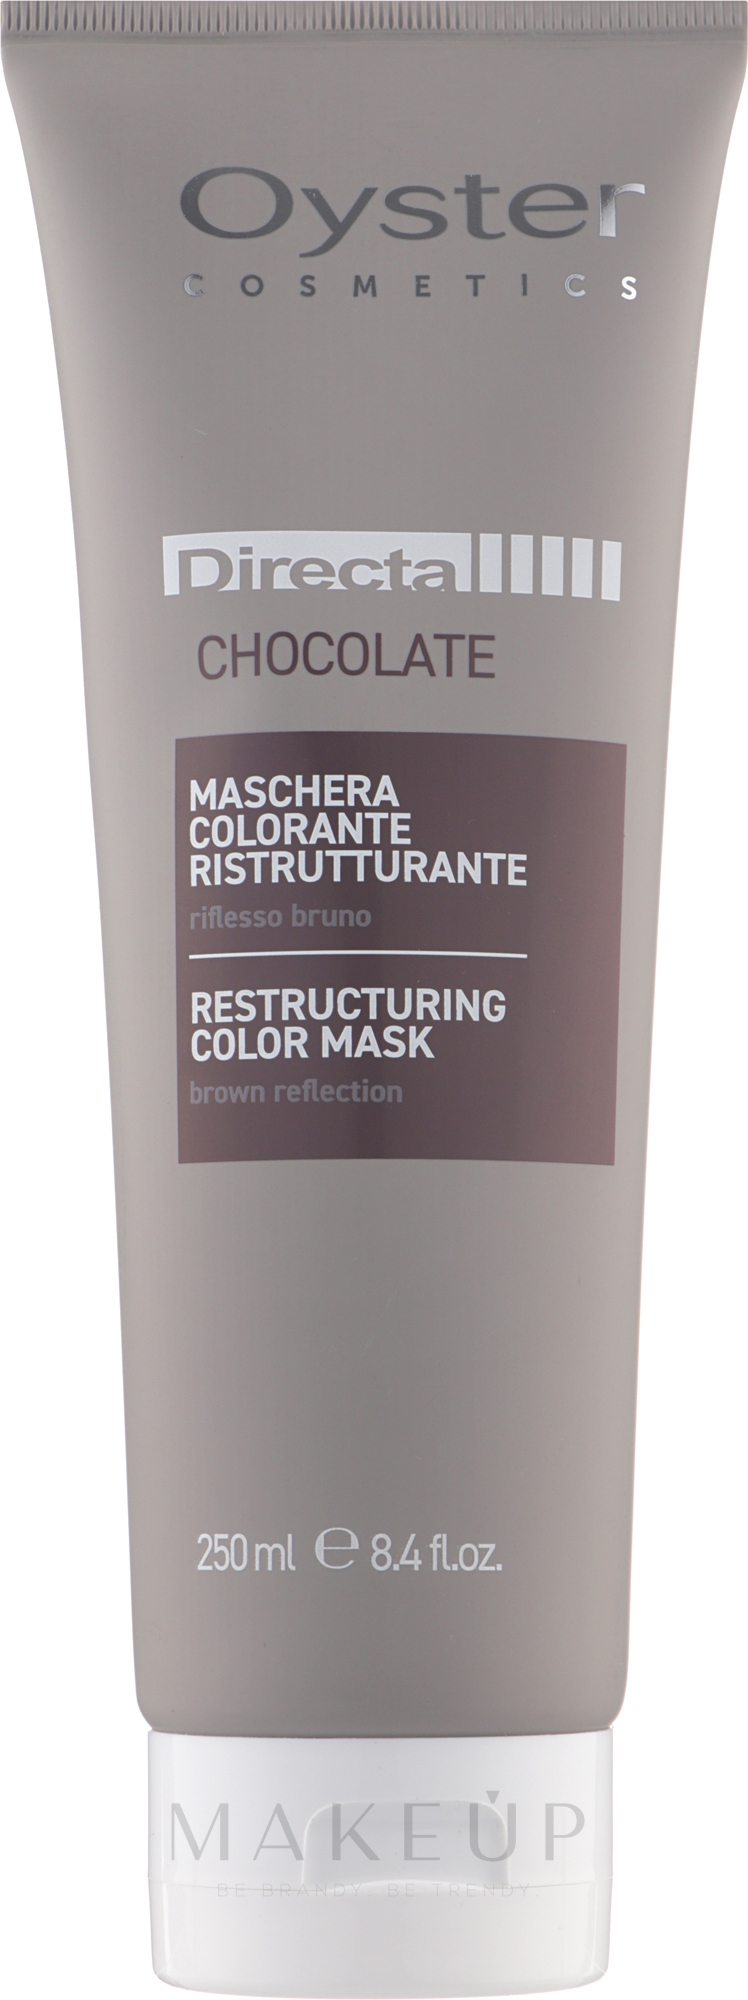 Tönungsmaske - Oyster Cosmetics Directa Restructuring Color Mask — Bild Chocolate